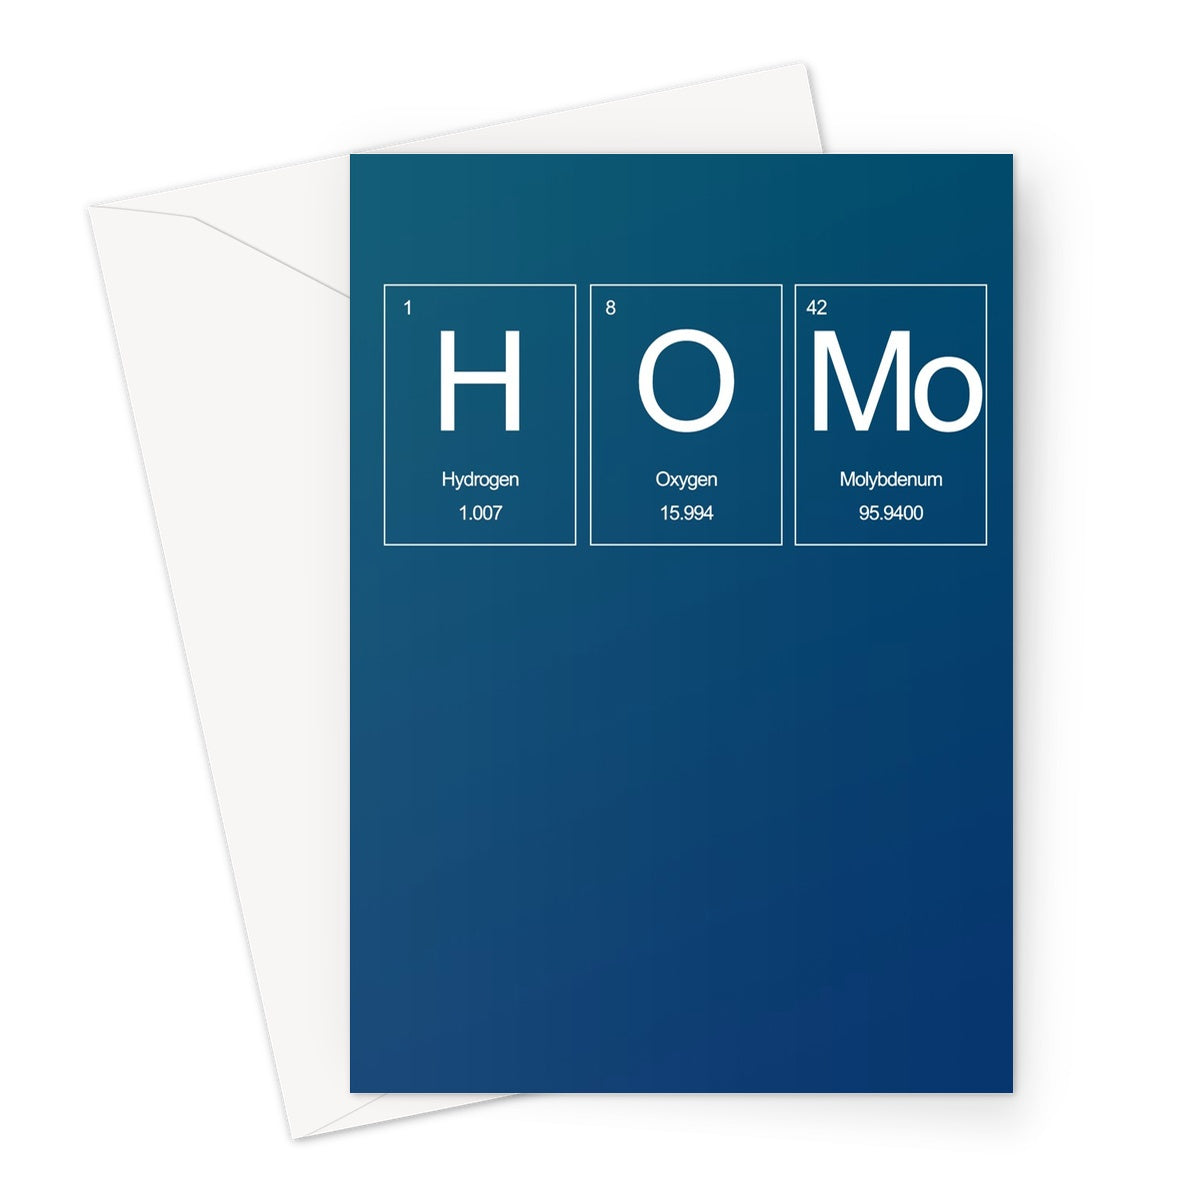 HOMo Greeting Card